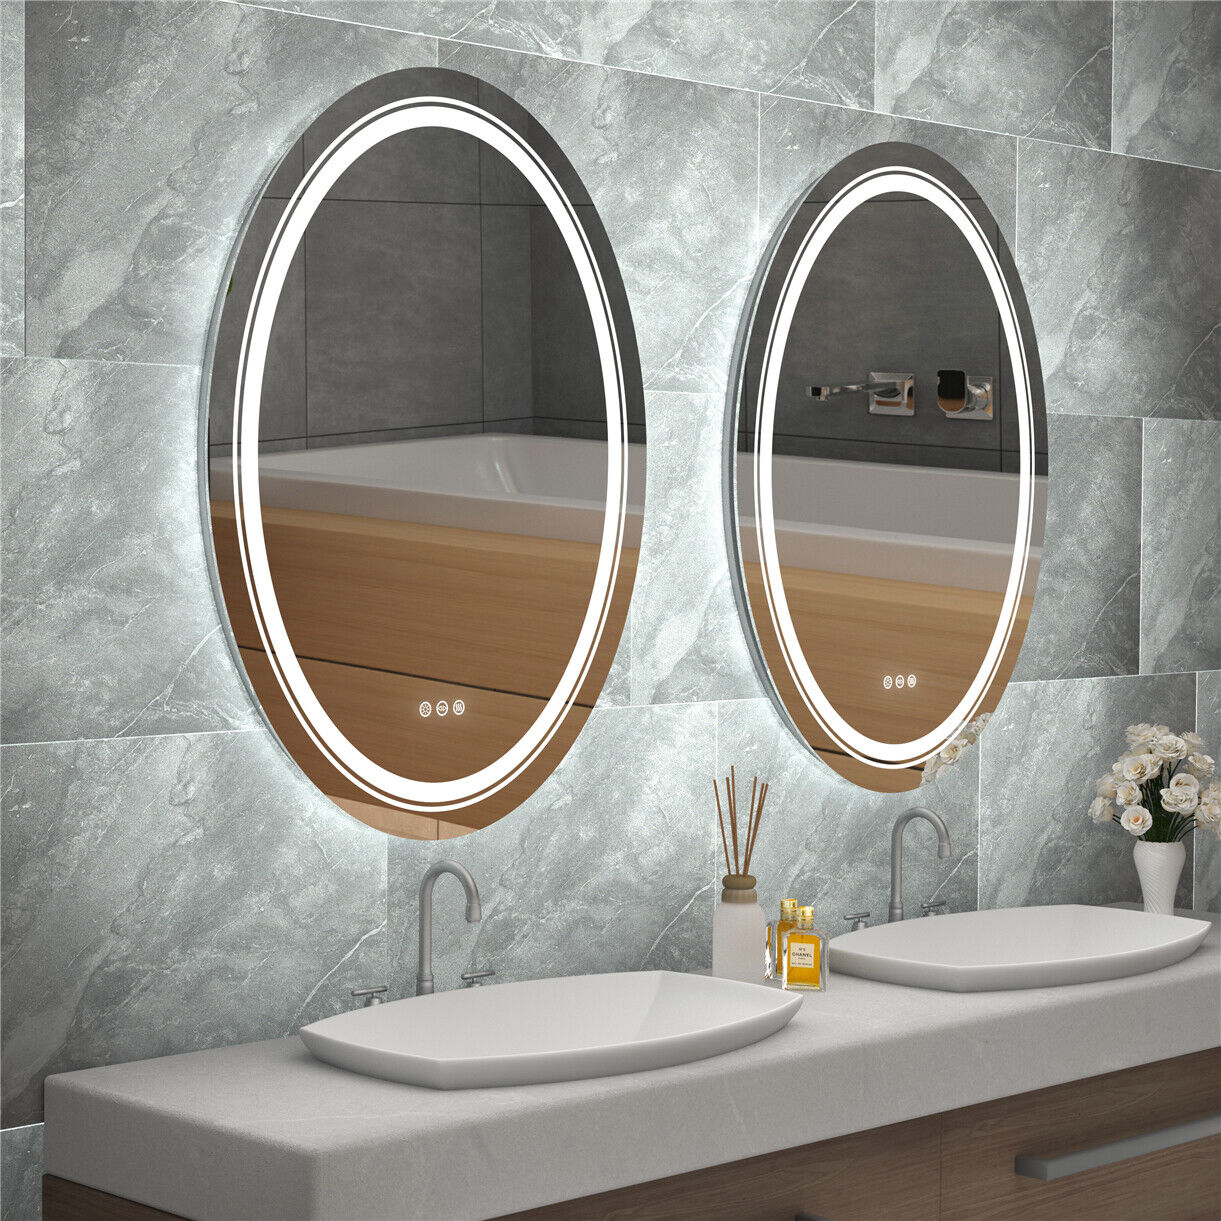 Wisfor Super Brightnedd Led Illuminated Bathroom Mirror Anti-Fog Dimmable Mirror